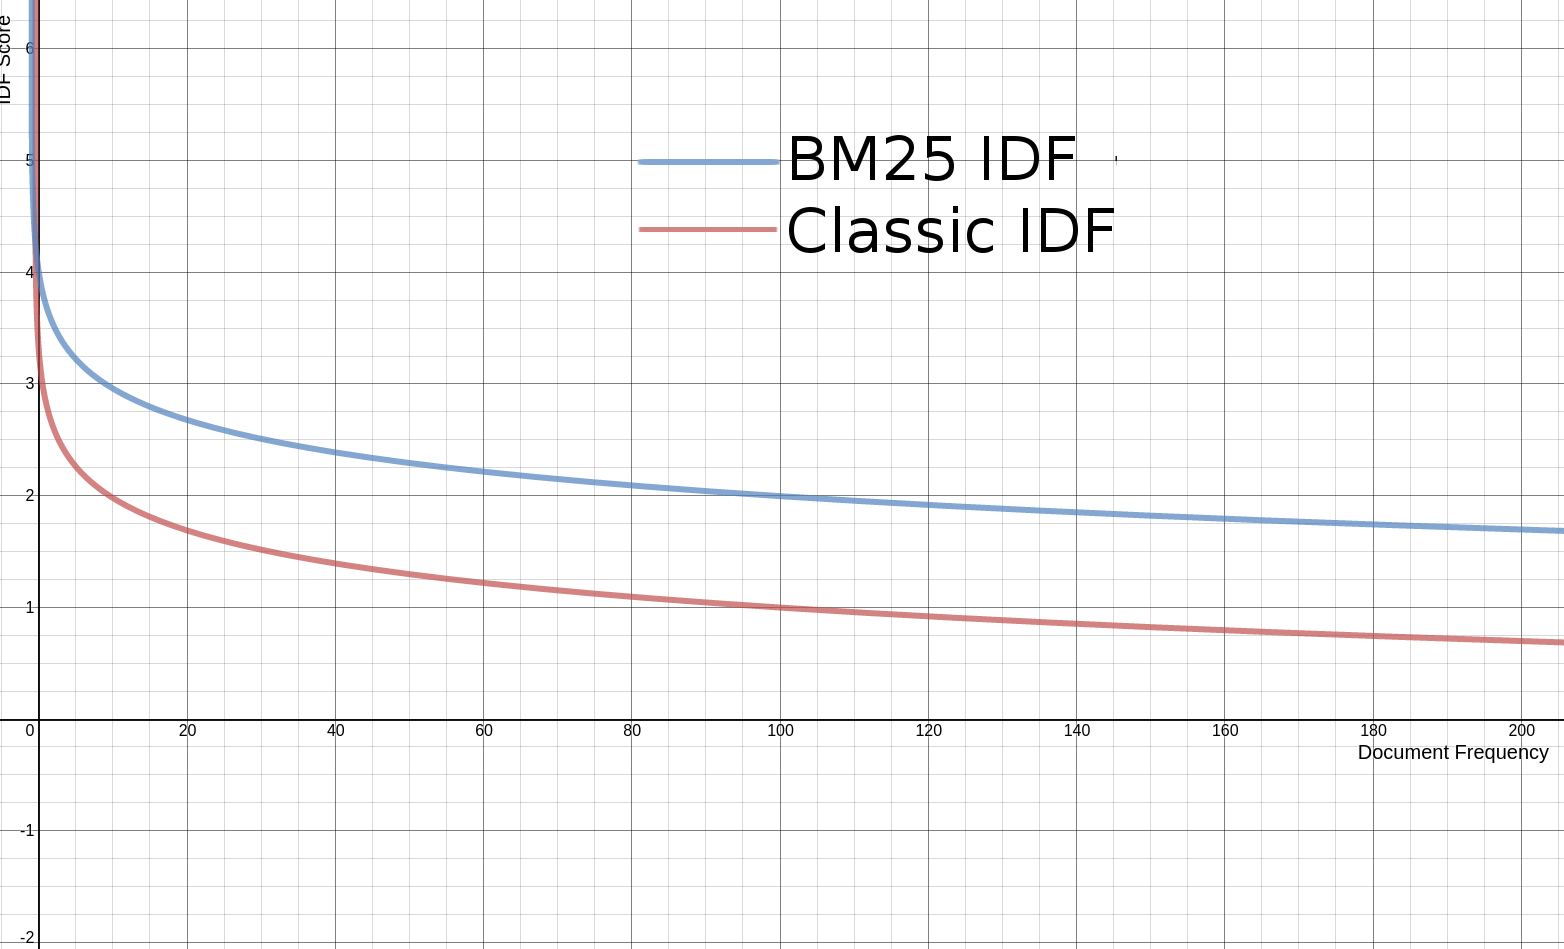 BM25 IDF vs Lucene Classic IDF